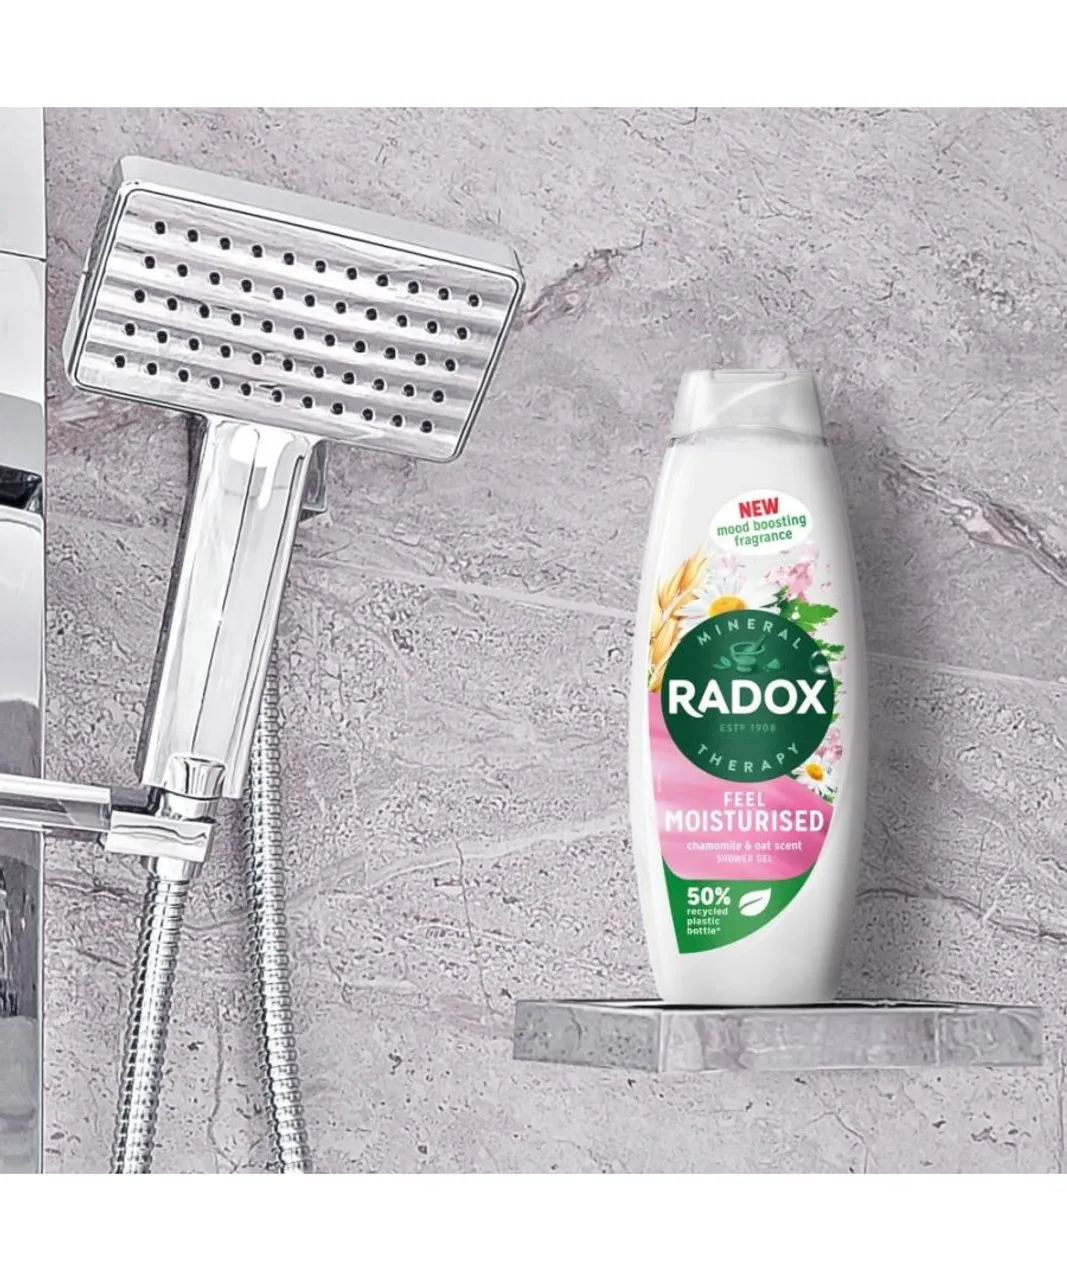 Radox Unisex Mineral Therapy Shower Gel Feel Moisturised Mood Boosting Fragrance, 6pk - One Size